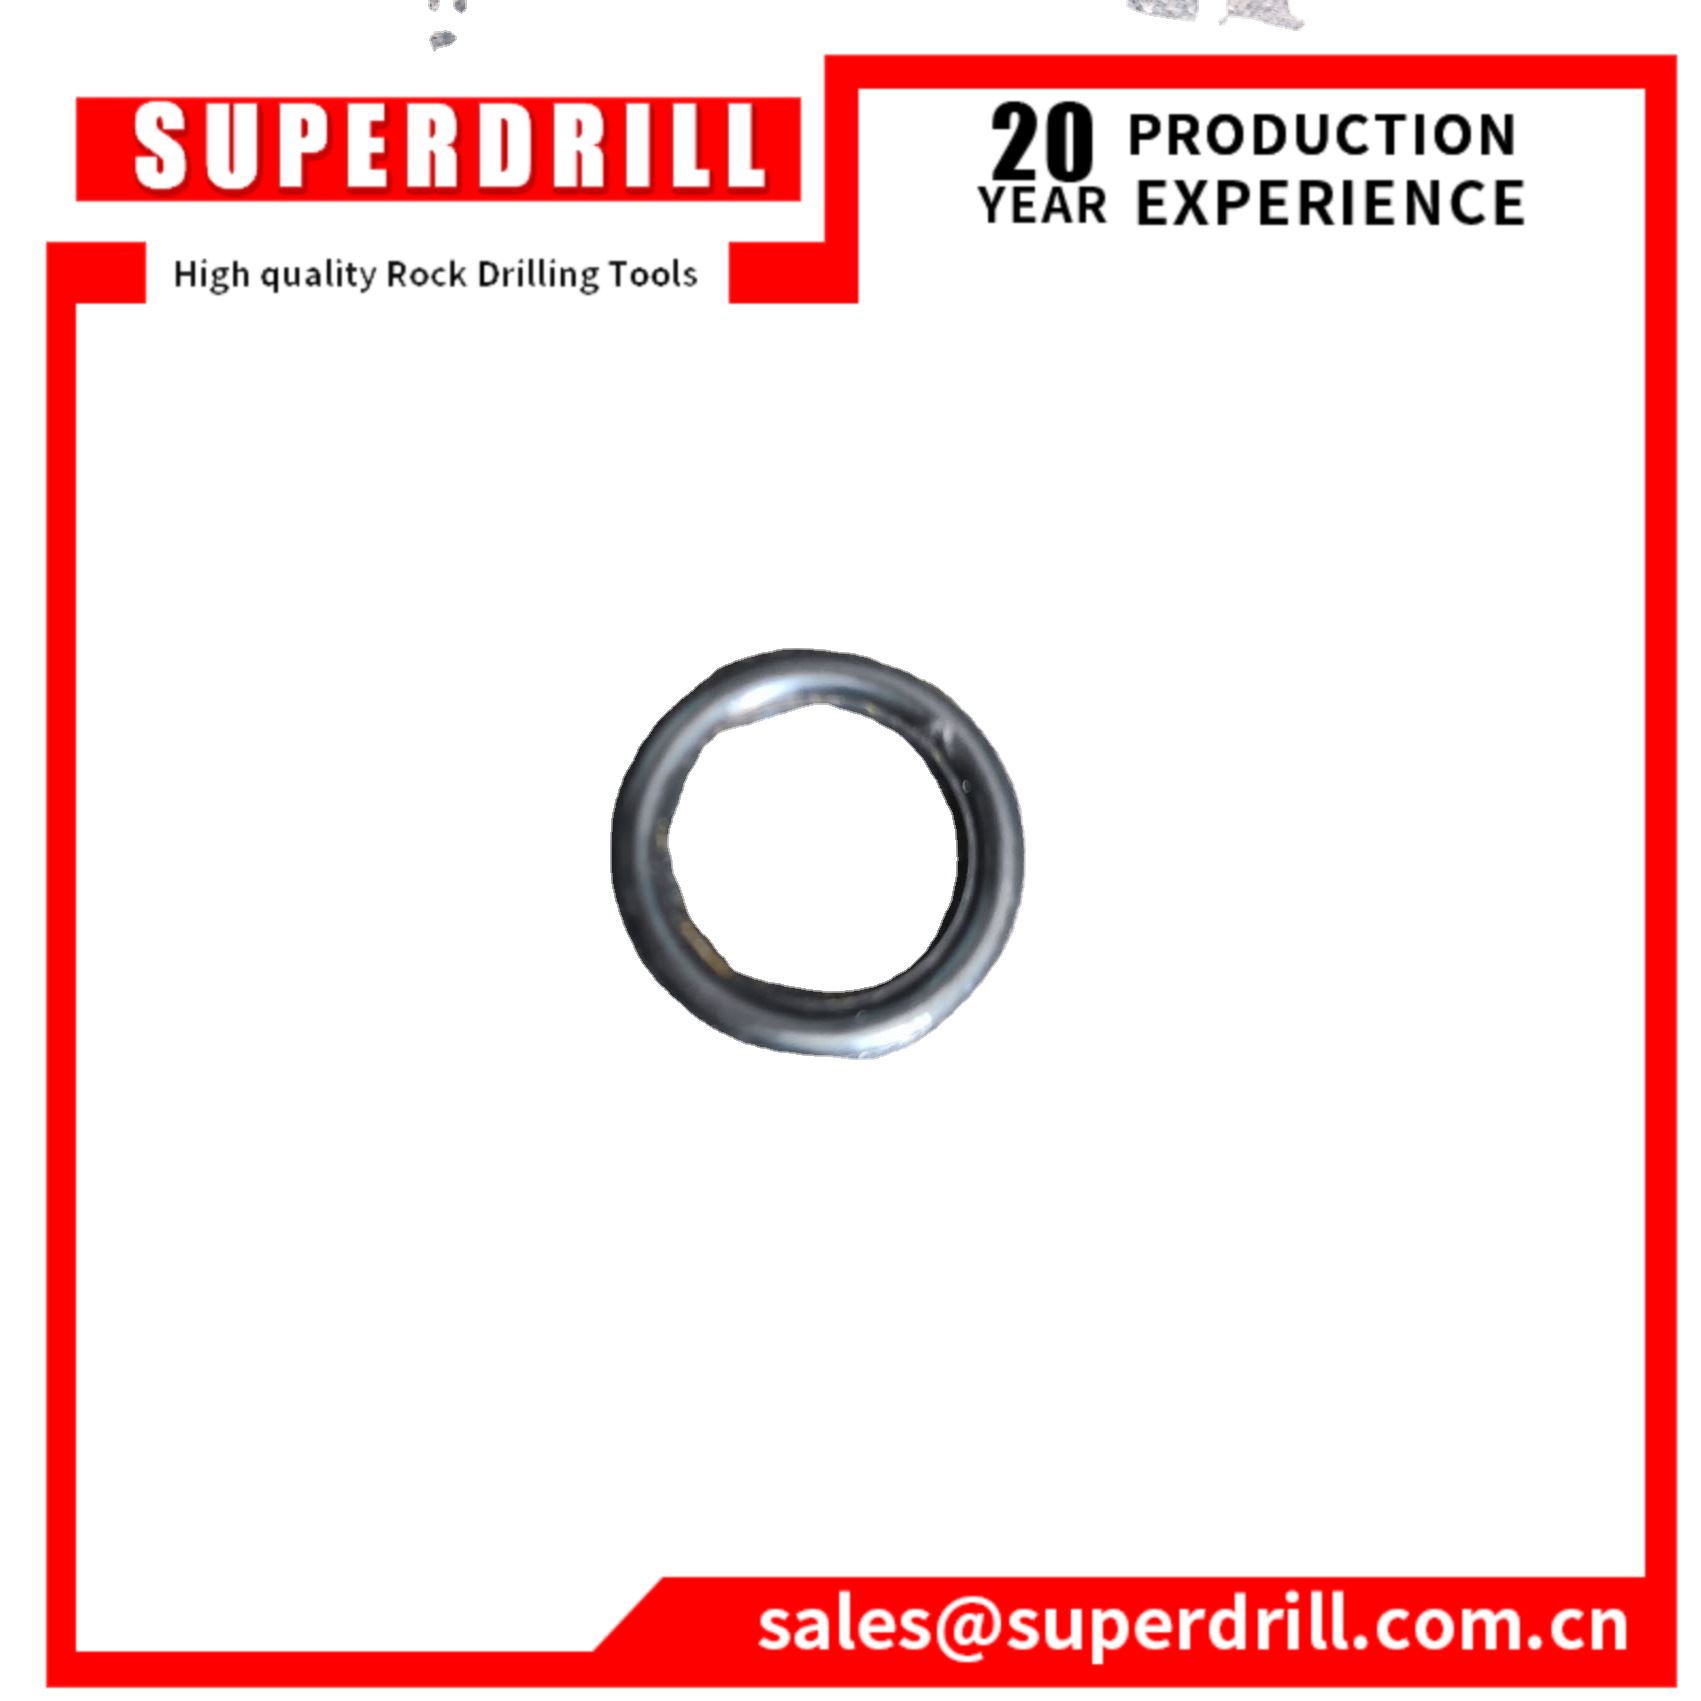 86570447/seal Ring / Hc 109 Hc120 150 50 / Drilling Rig Parts